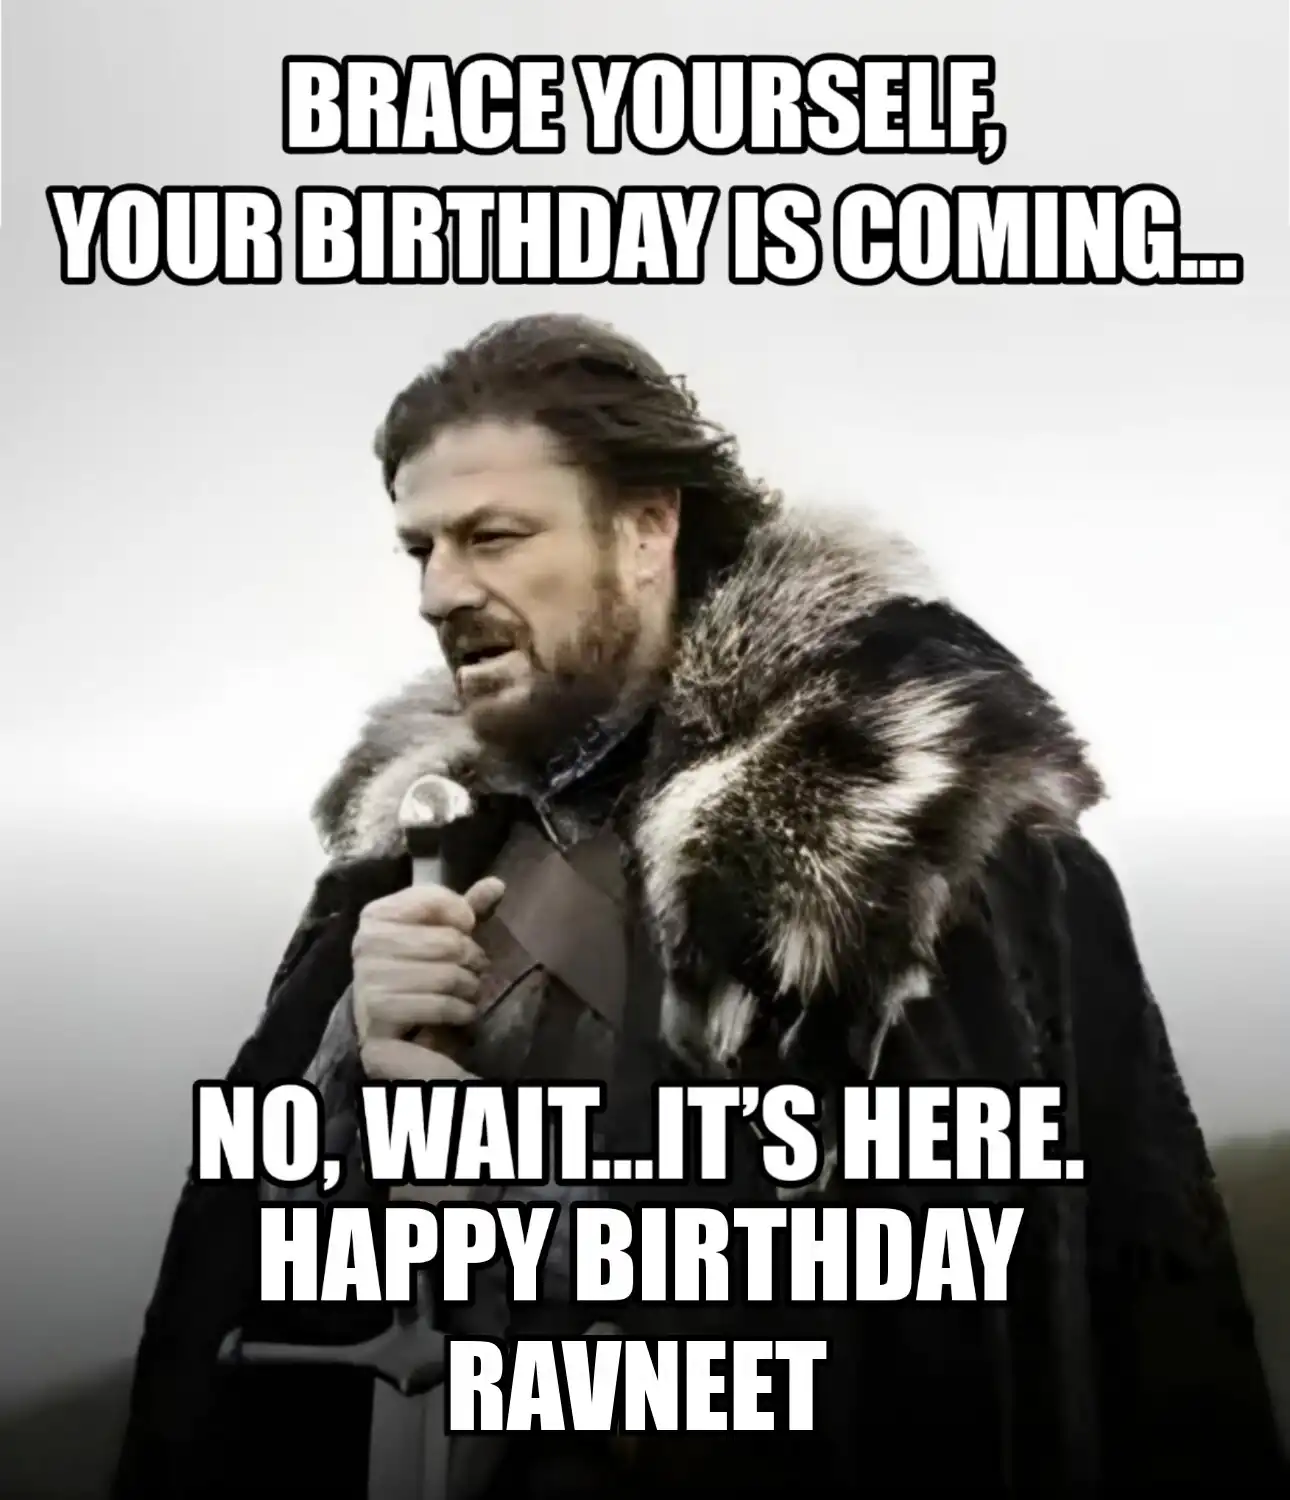 Happy Birthday Ravneet Brace Yourself Your Birthday Is Coming Meme